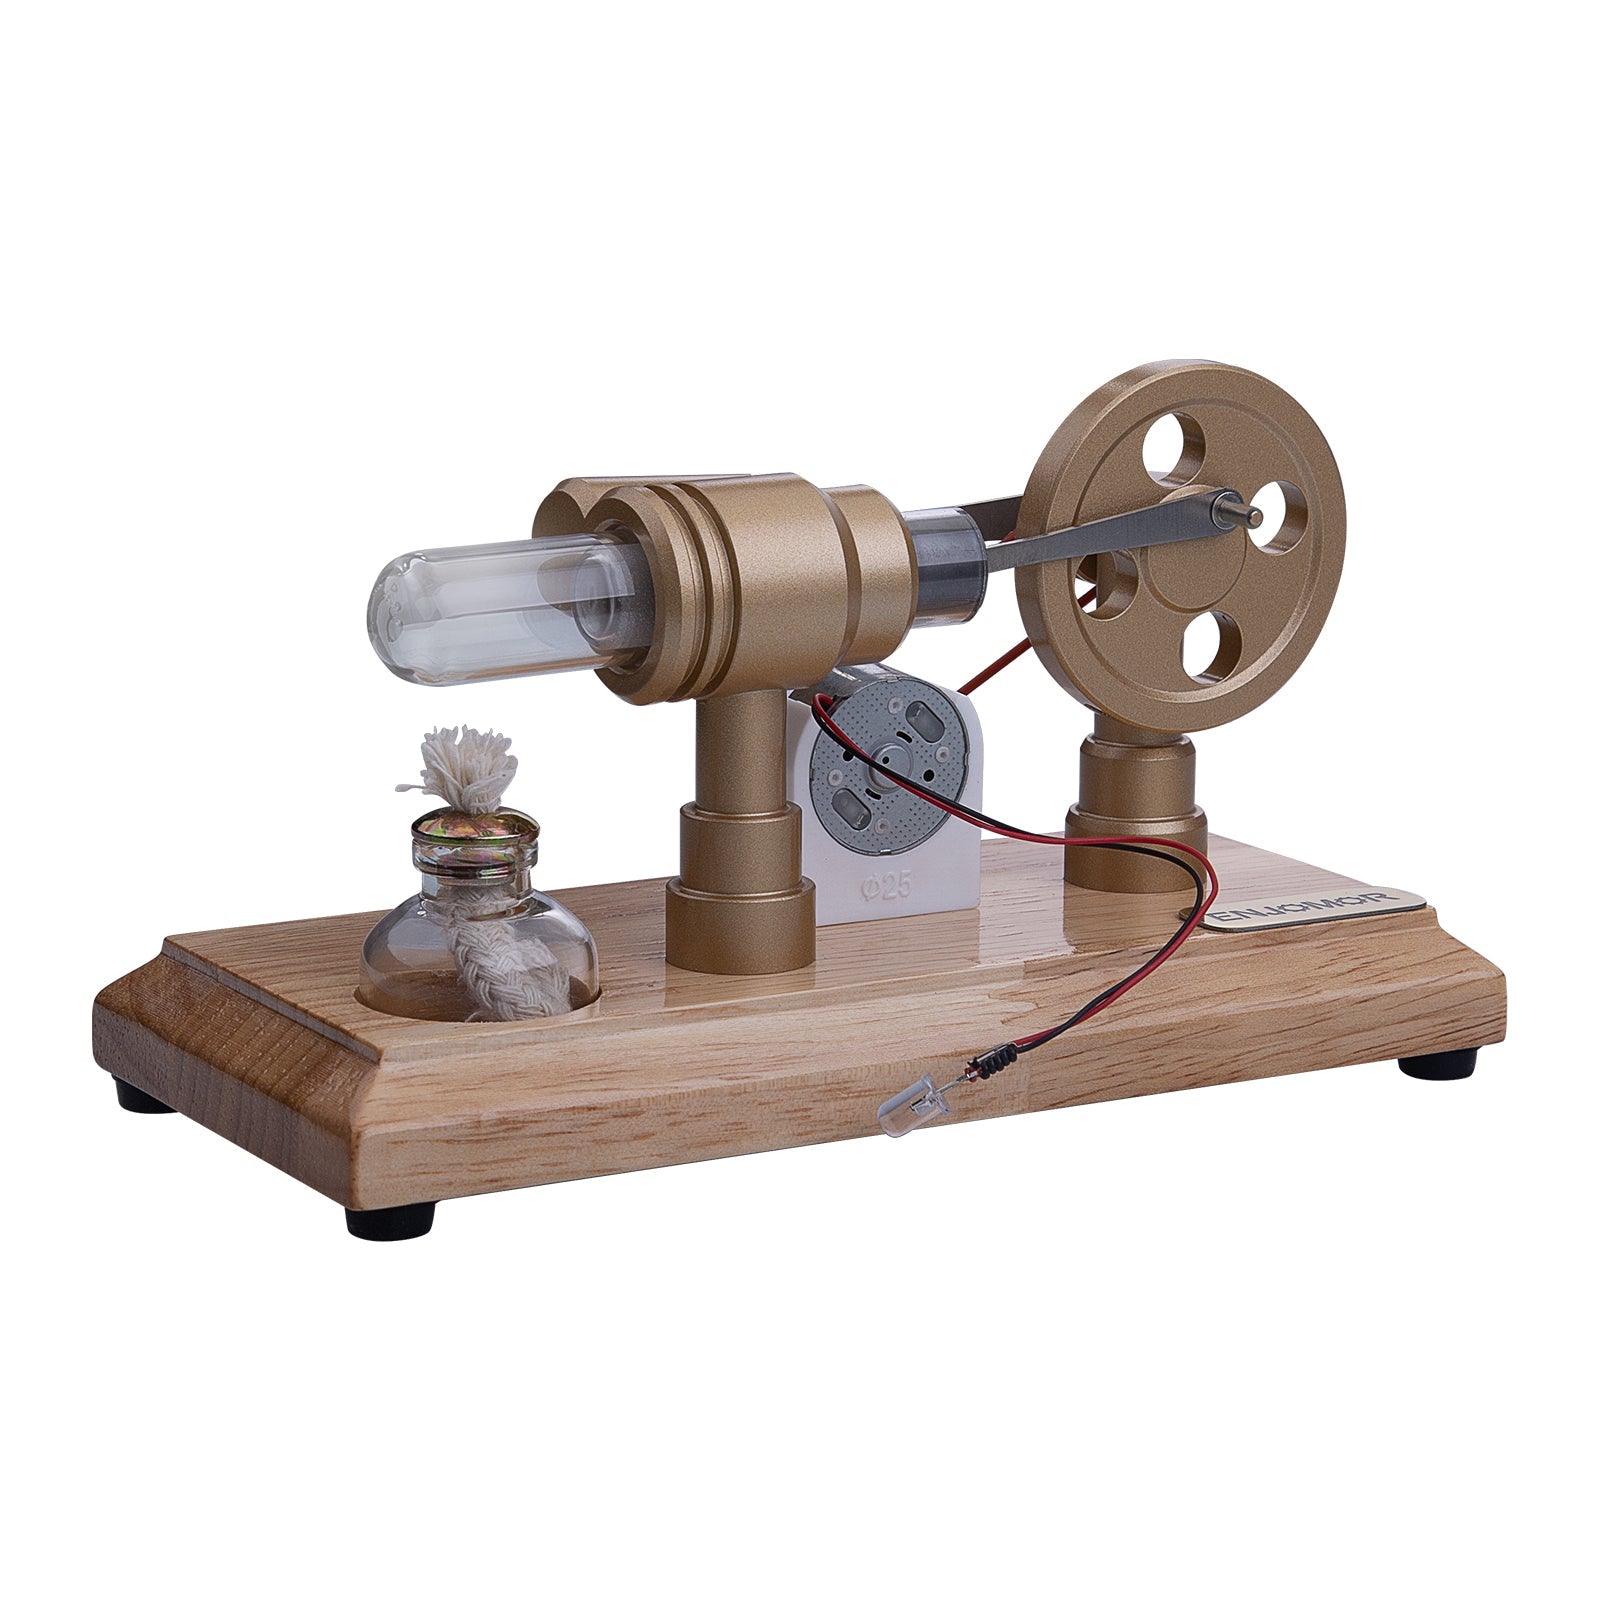 ENJOMOR Gamma Hot Air Stirling Engine External Combustion Engine Model with LED Light enginediyshop